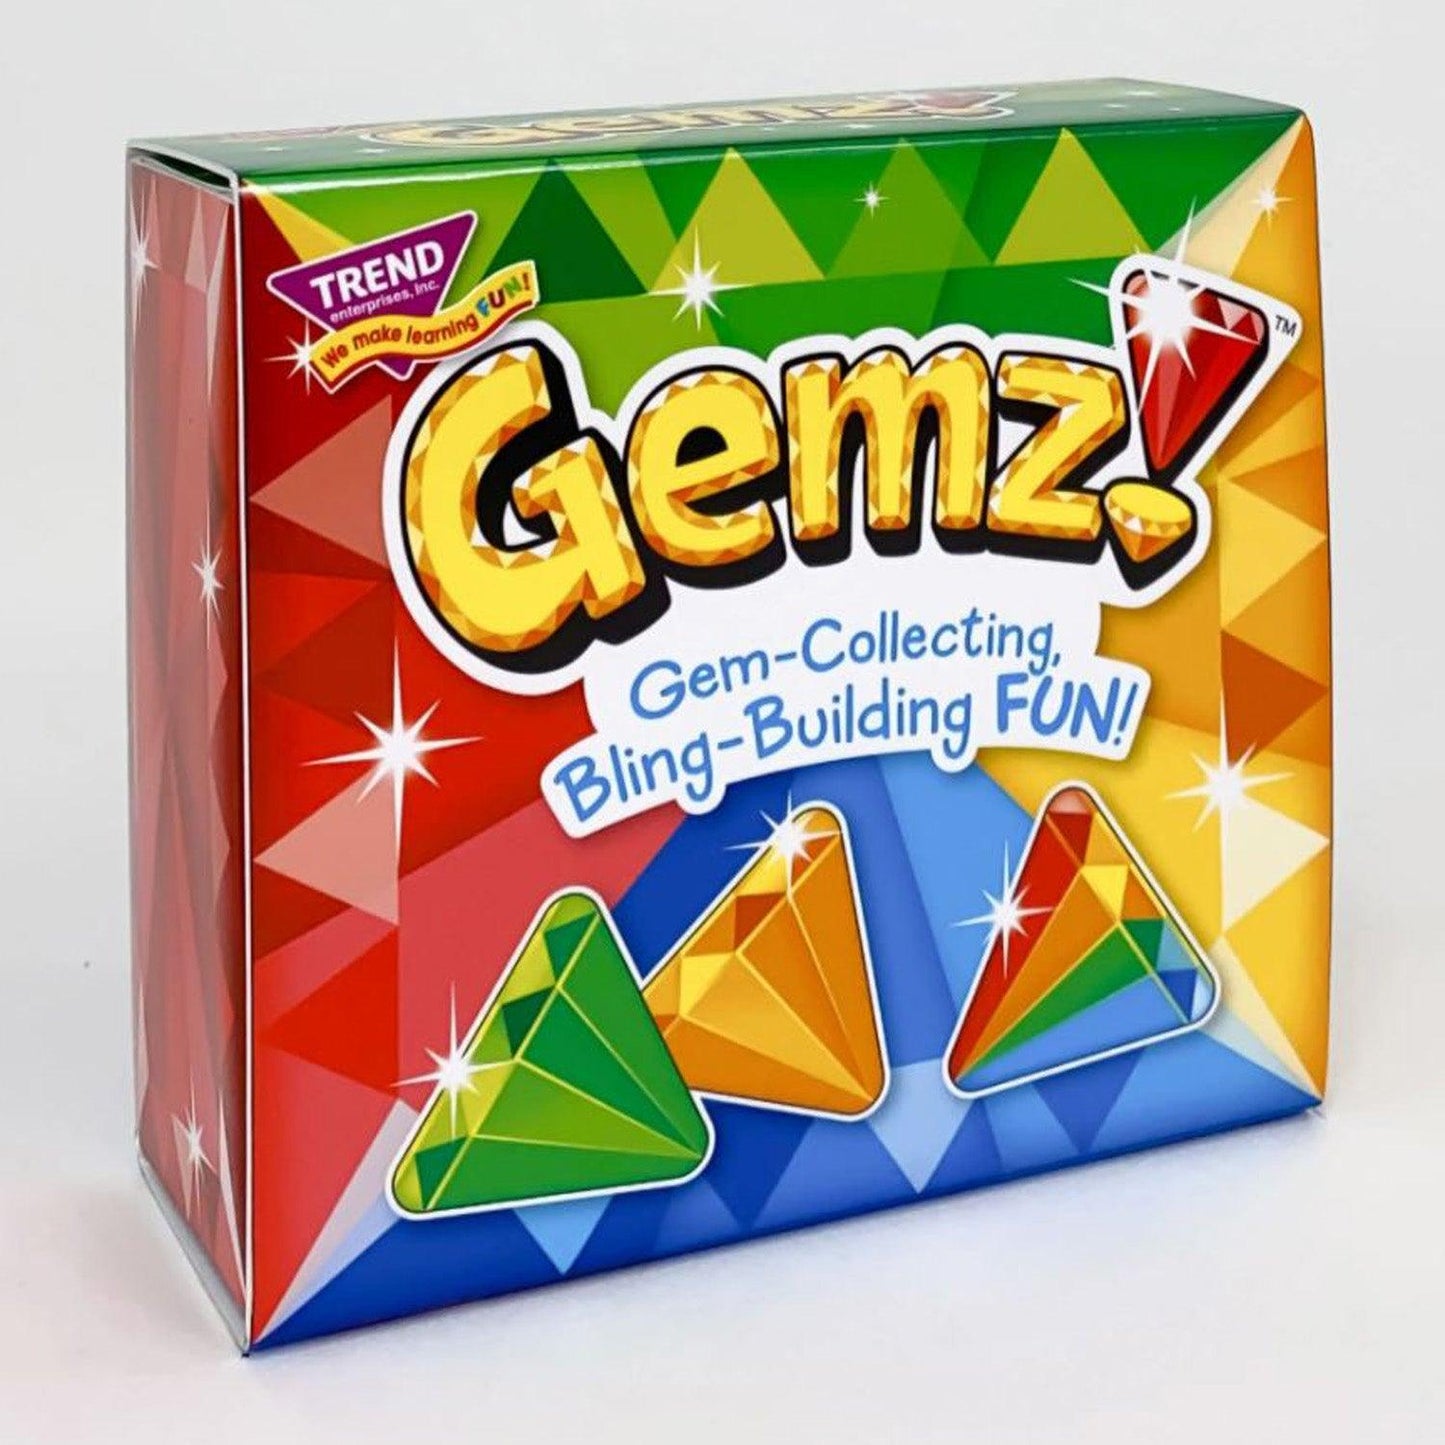 Gemz!™ Three Corner™ Card Game, Pack of 3 - Loomini